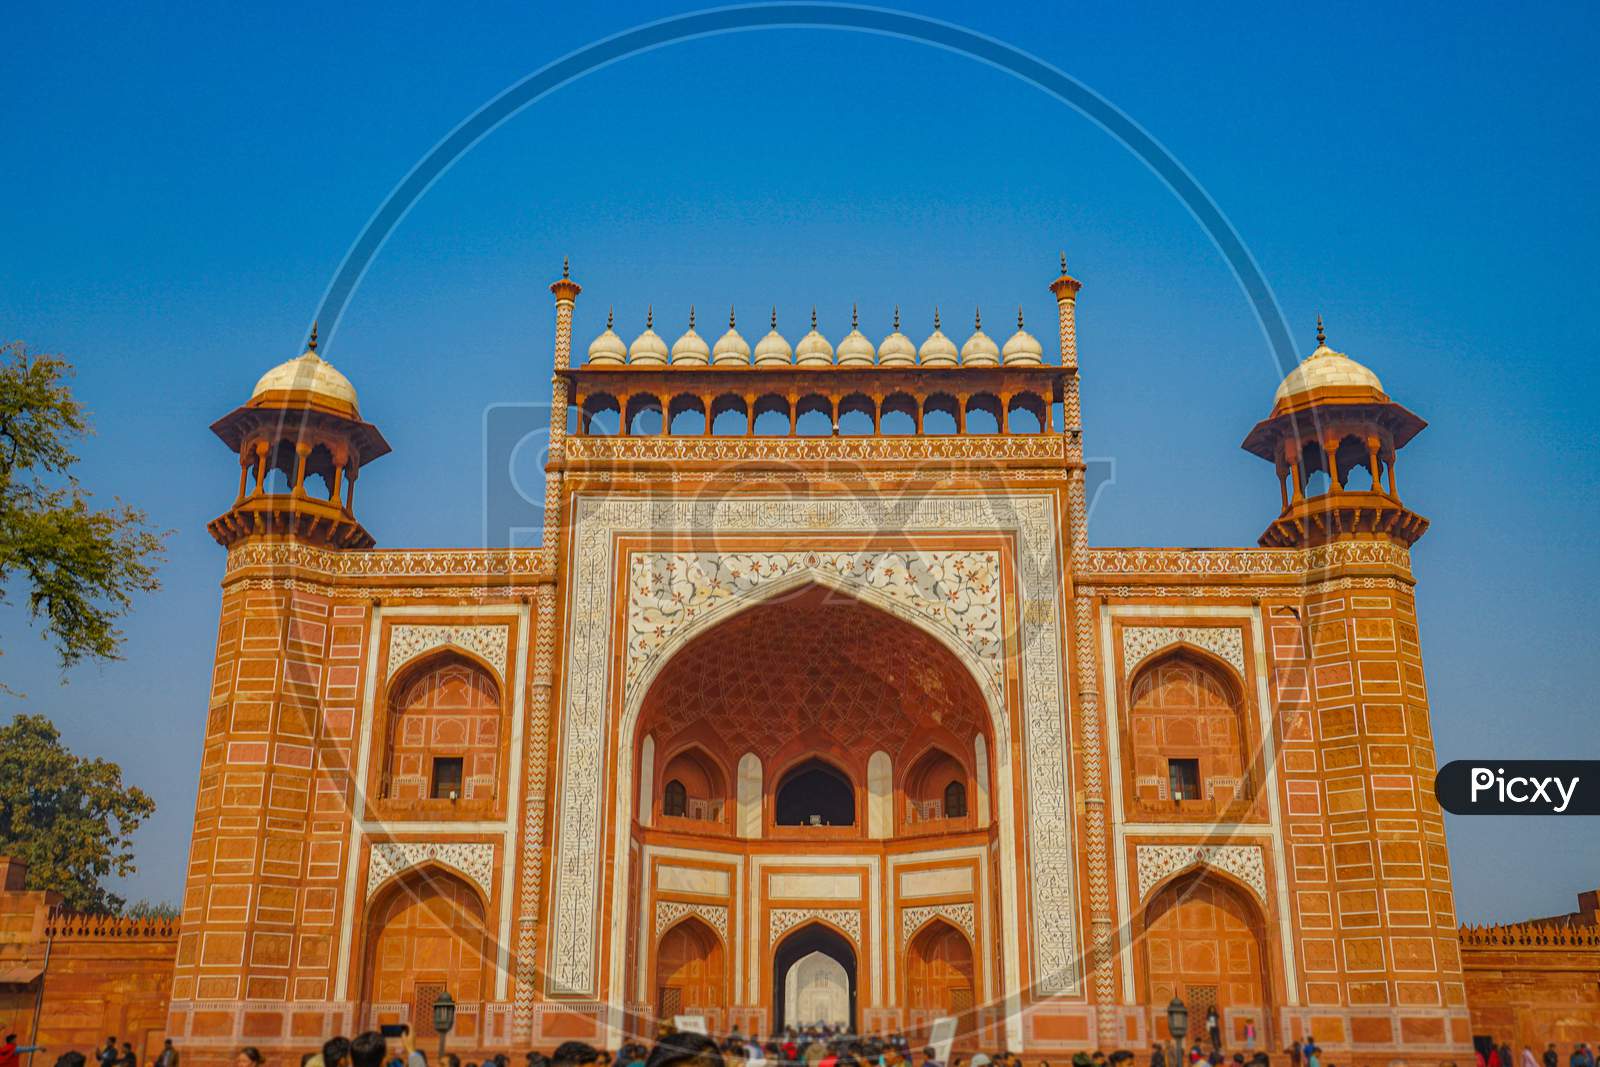 The Taj Mahal Of The Large Tower Gate (India, Agra)